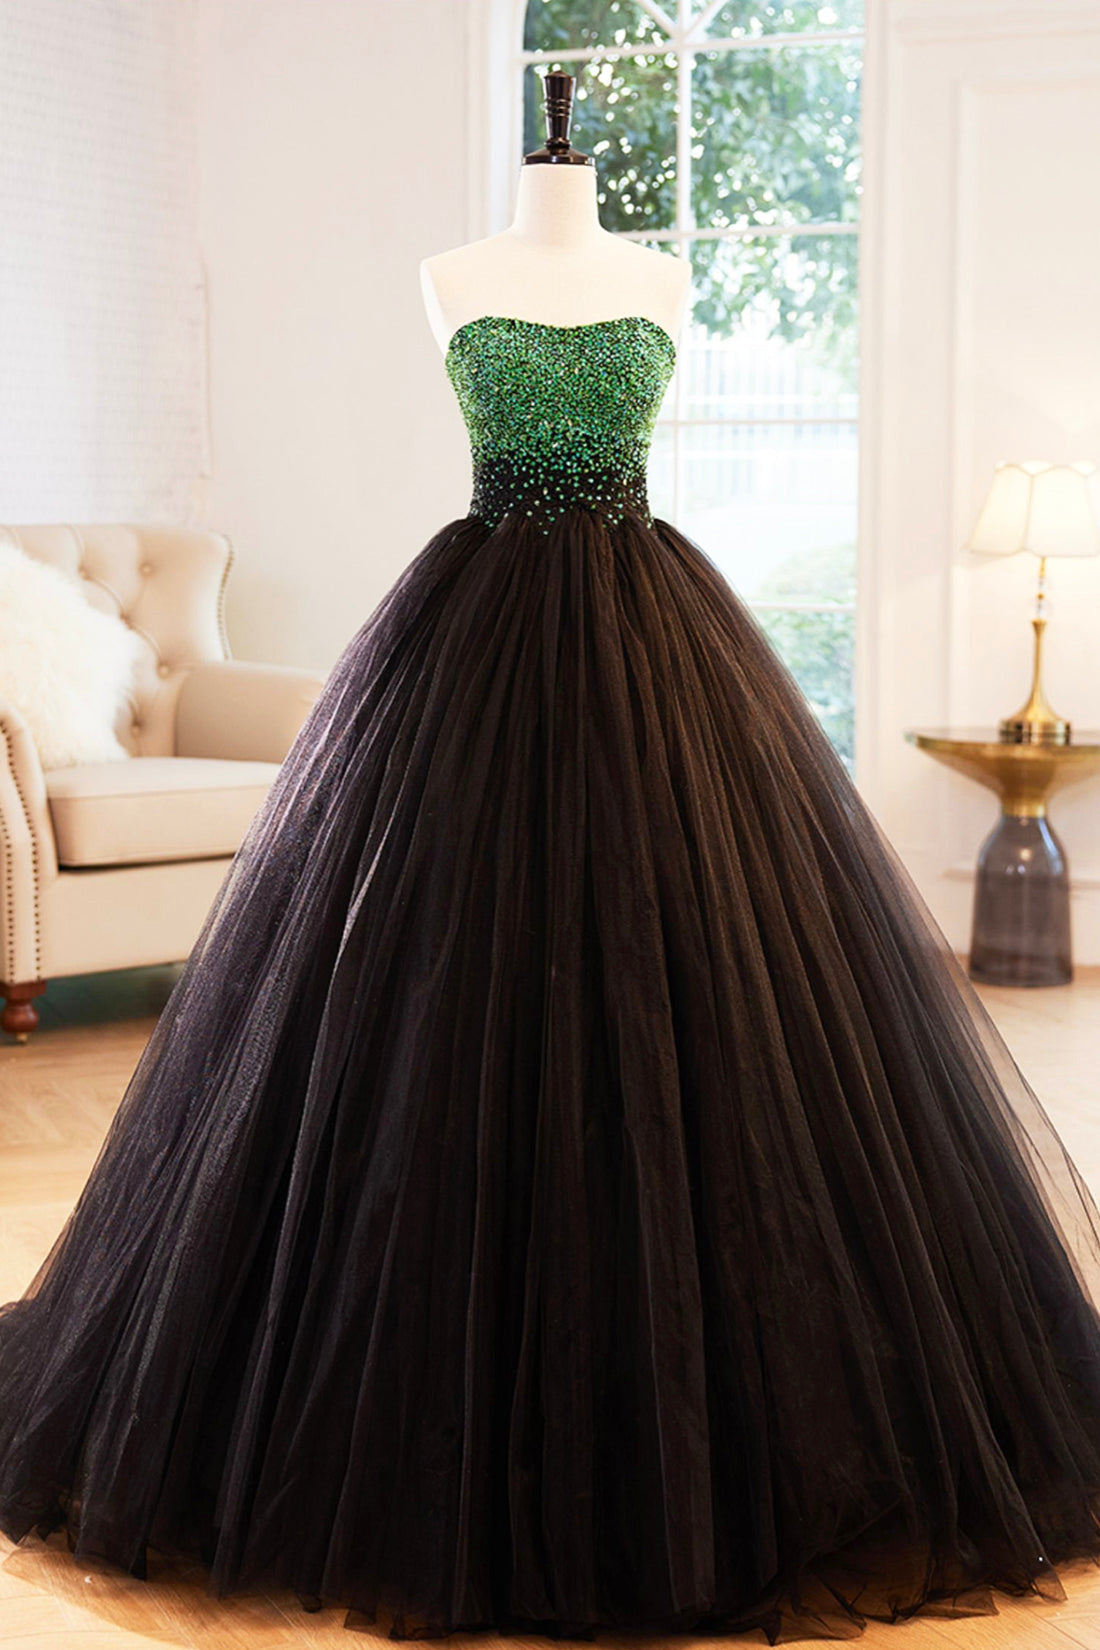 Midi Dress, Black Tulle Long Formal Dress with Green Beaded, Black Strapless Prom Dress